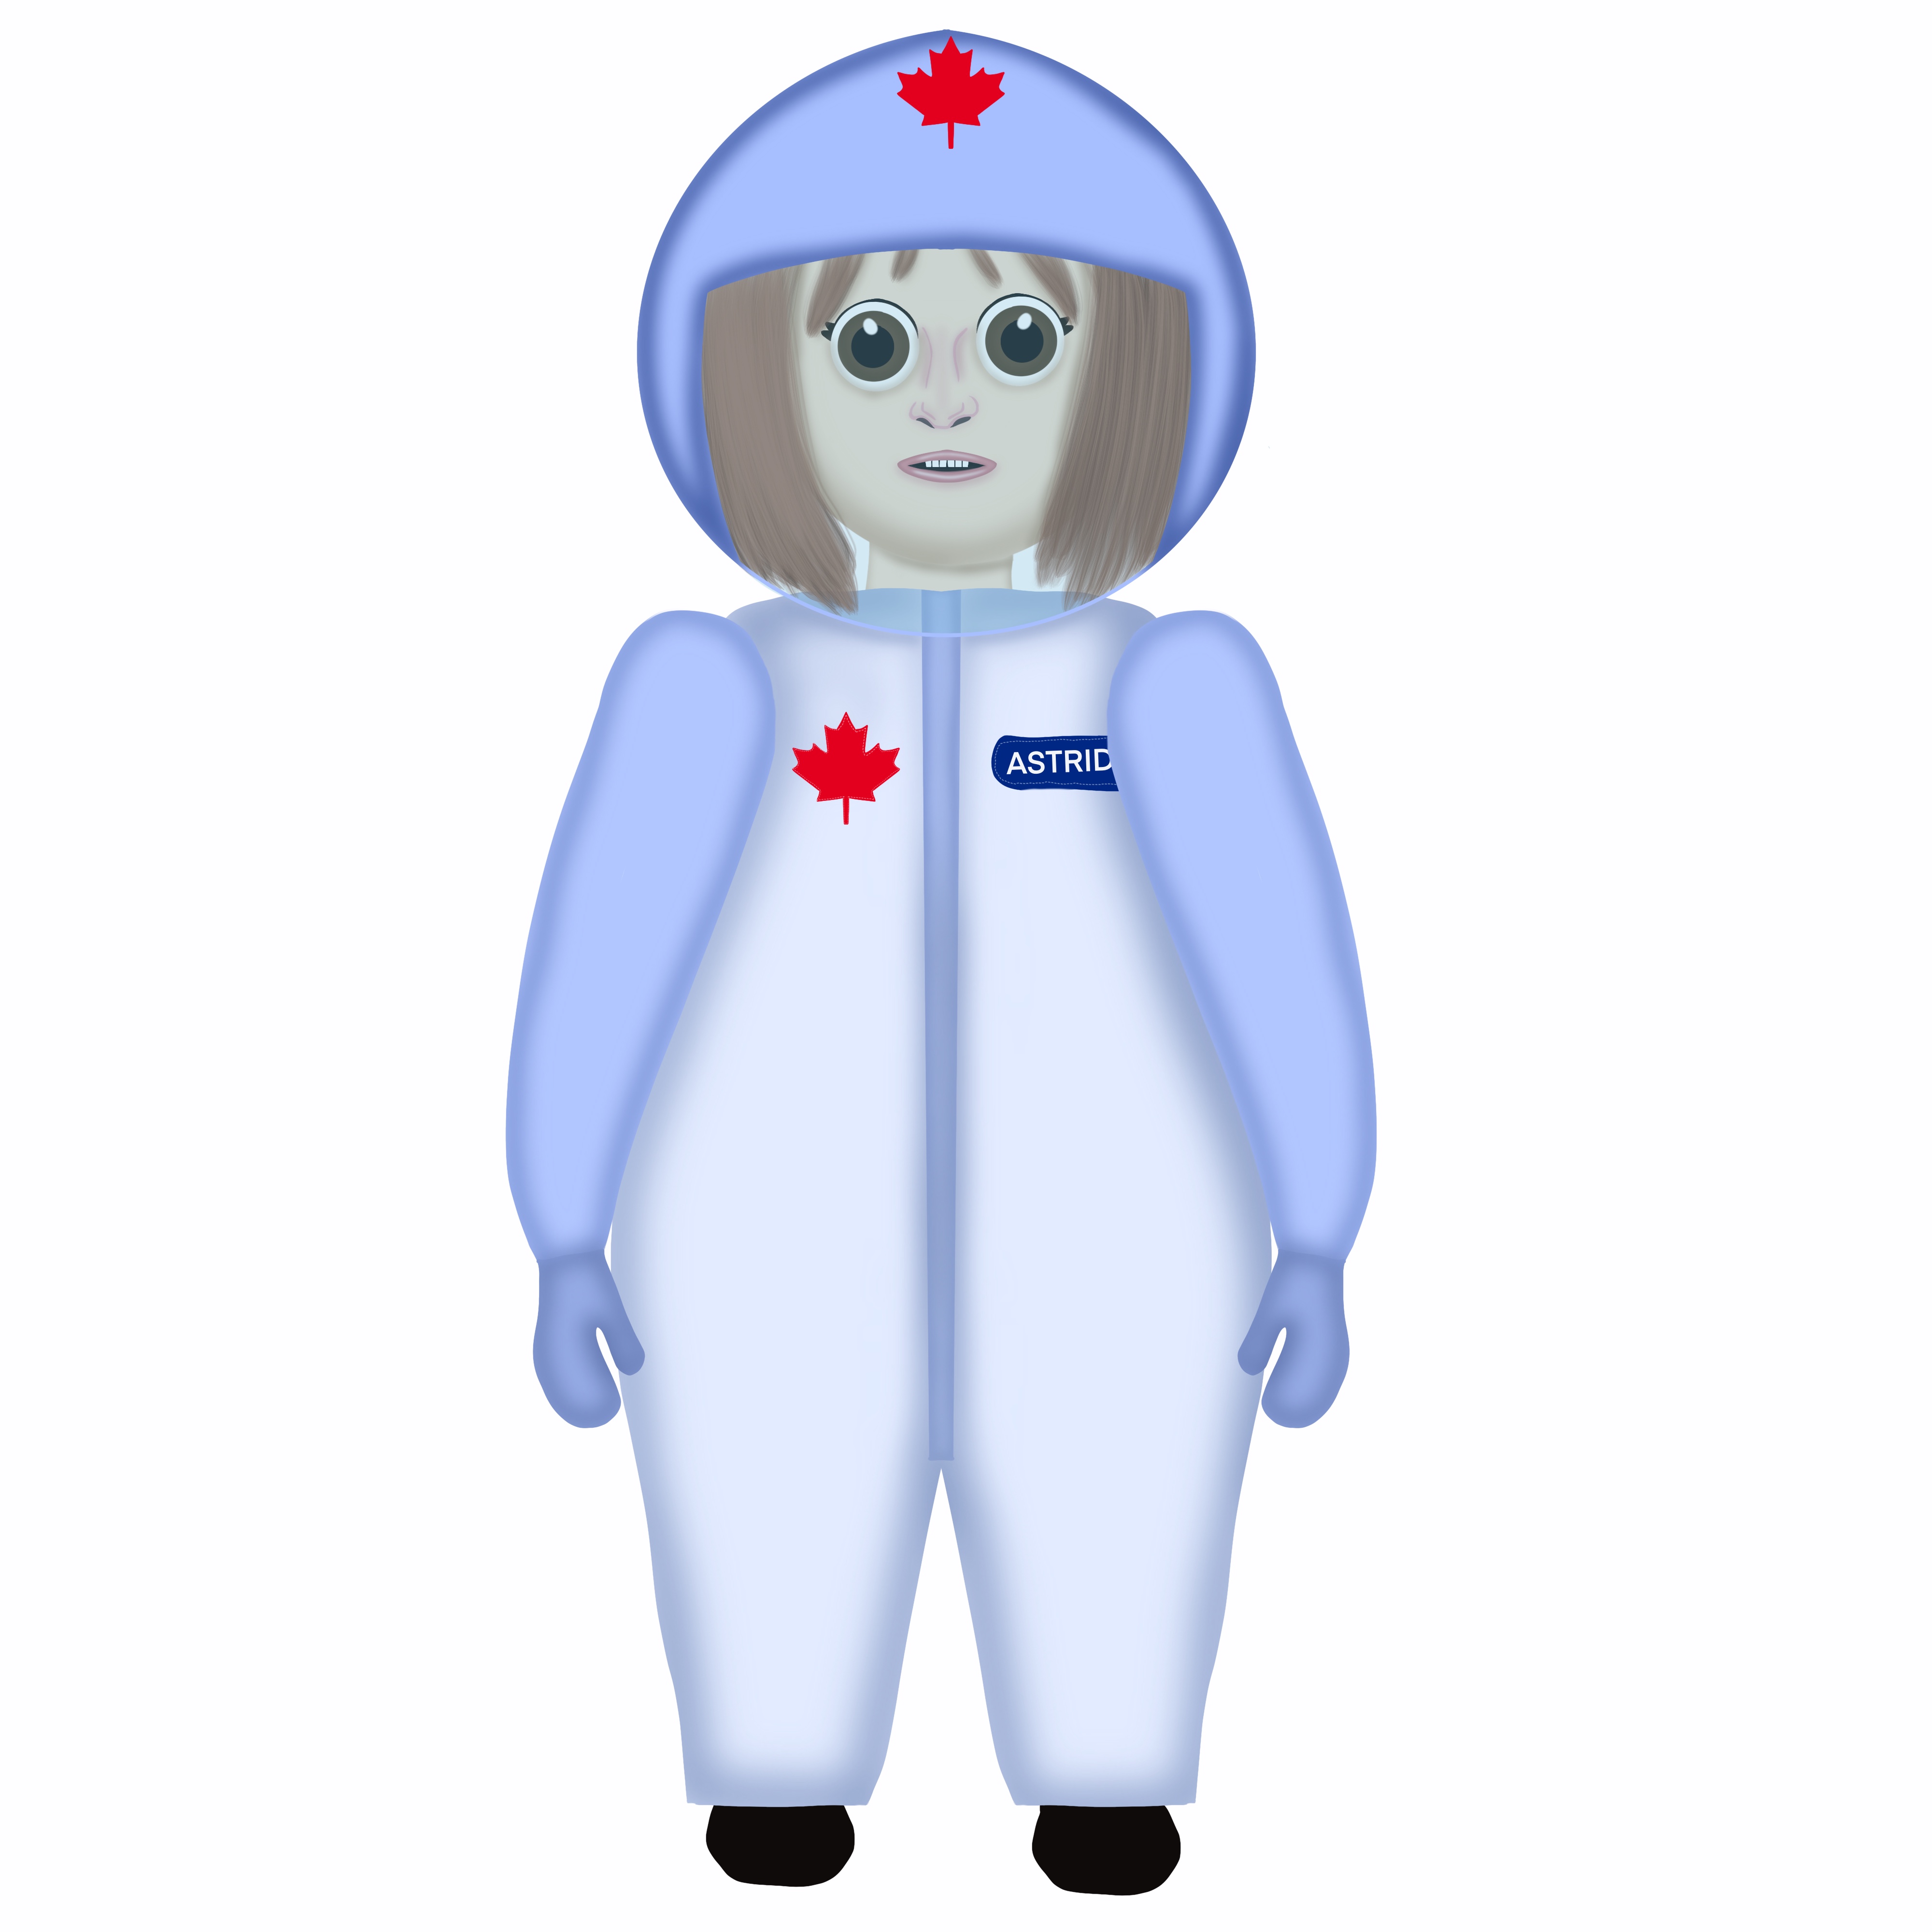 Astrid the Astronaut